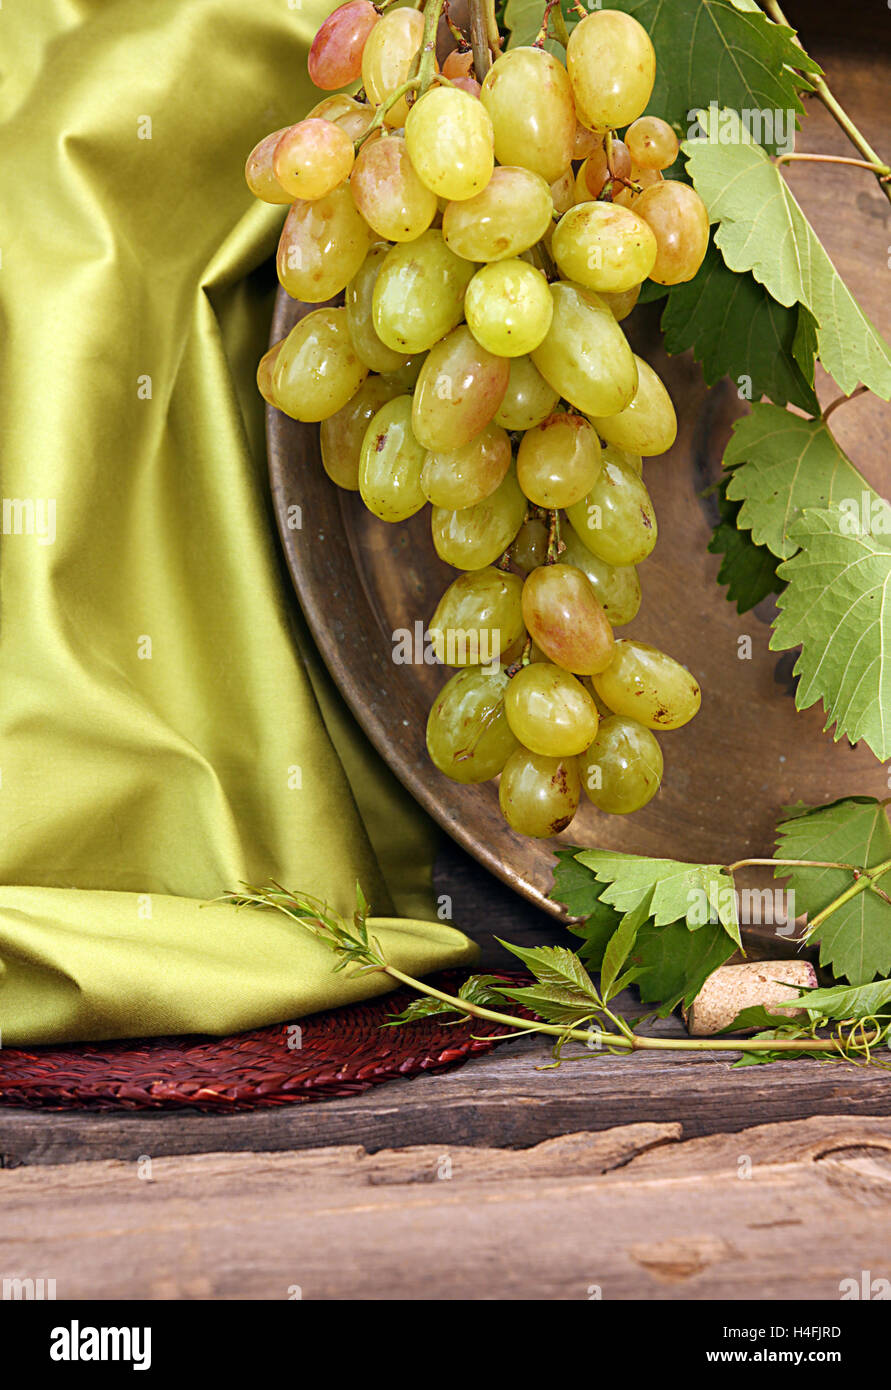 Order Organic Green Grapes